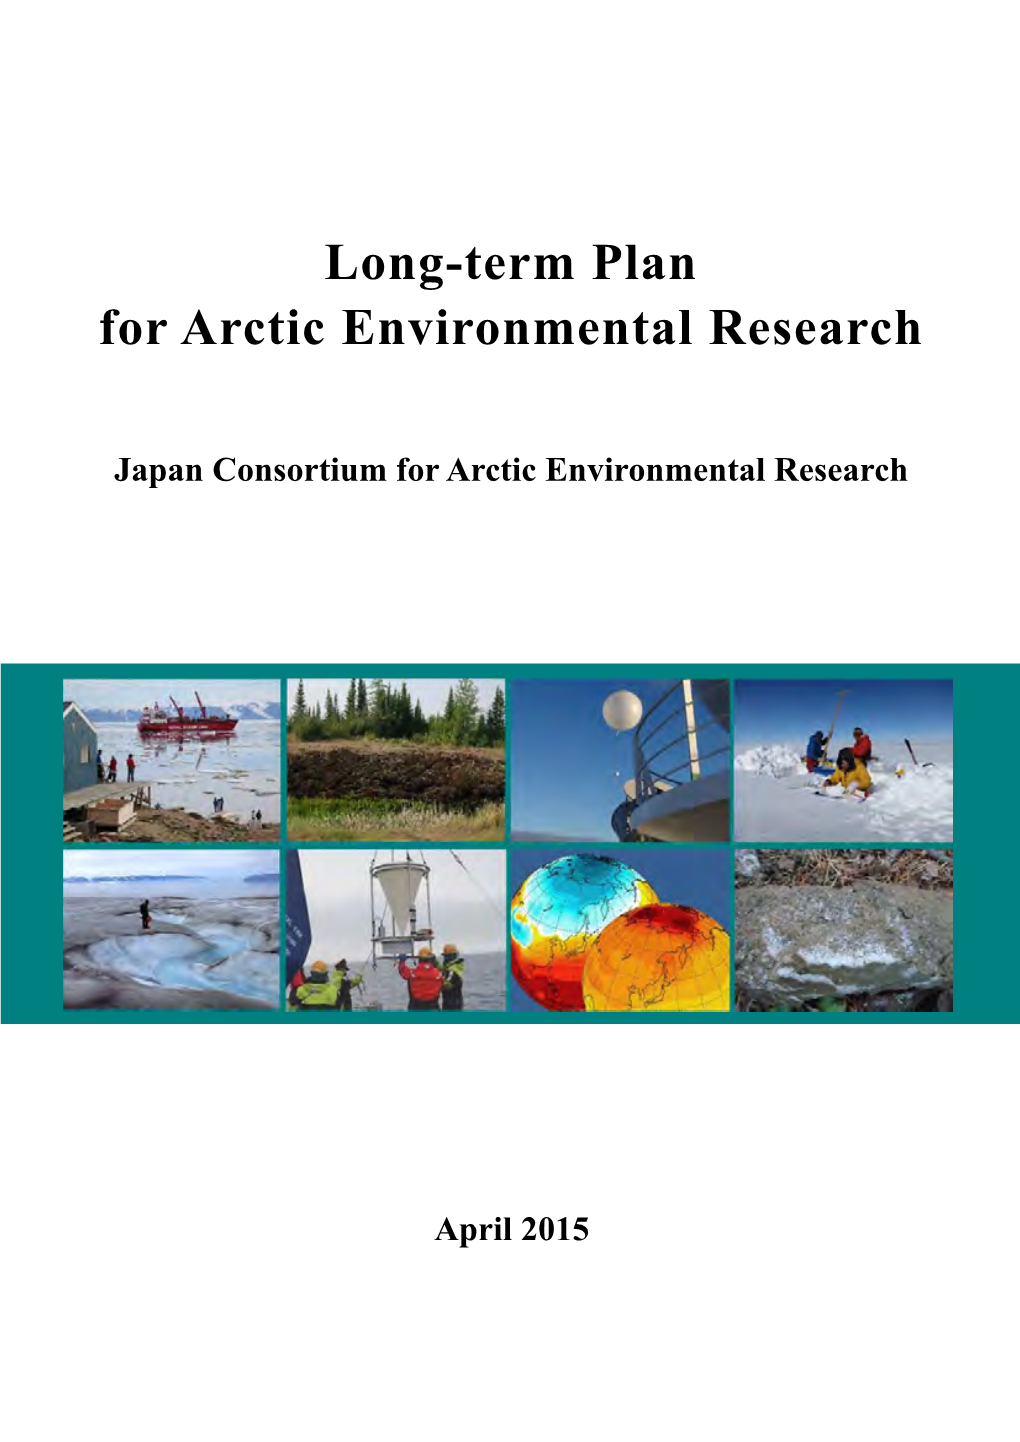 Long-Term Plan for Arctic Environmental Research JCAR